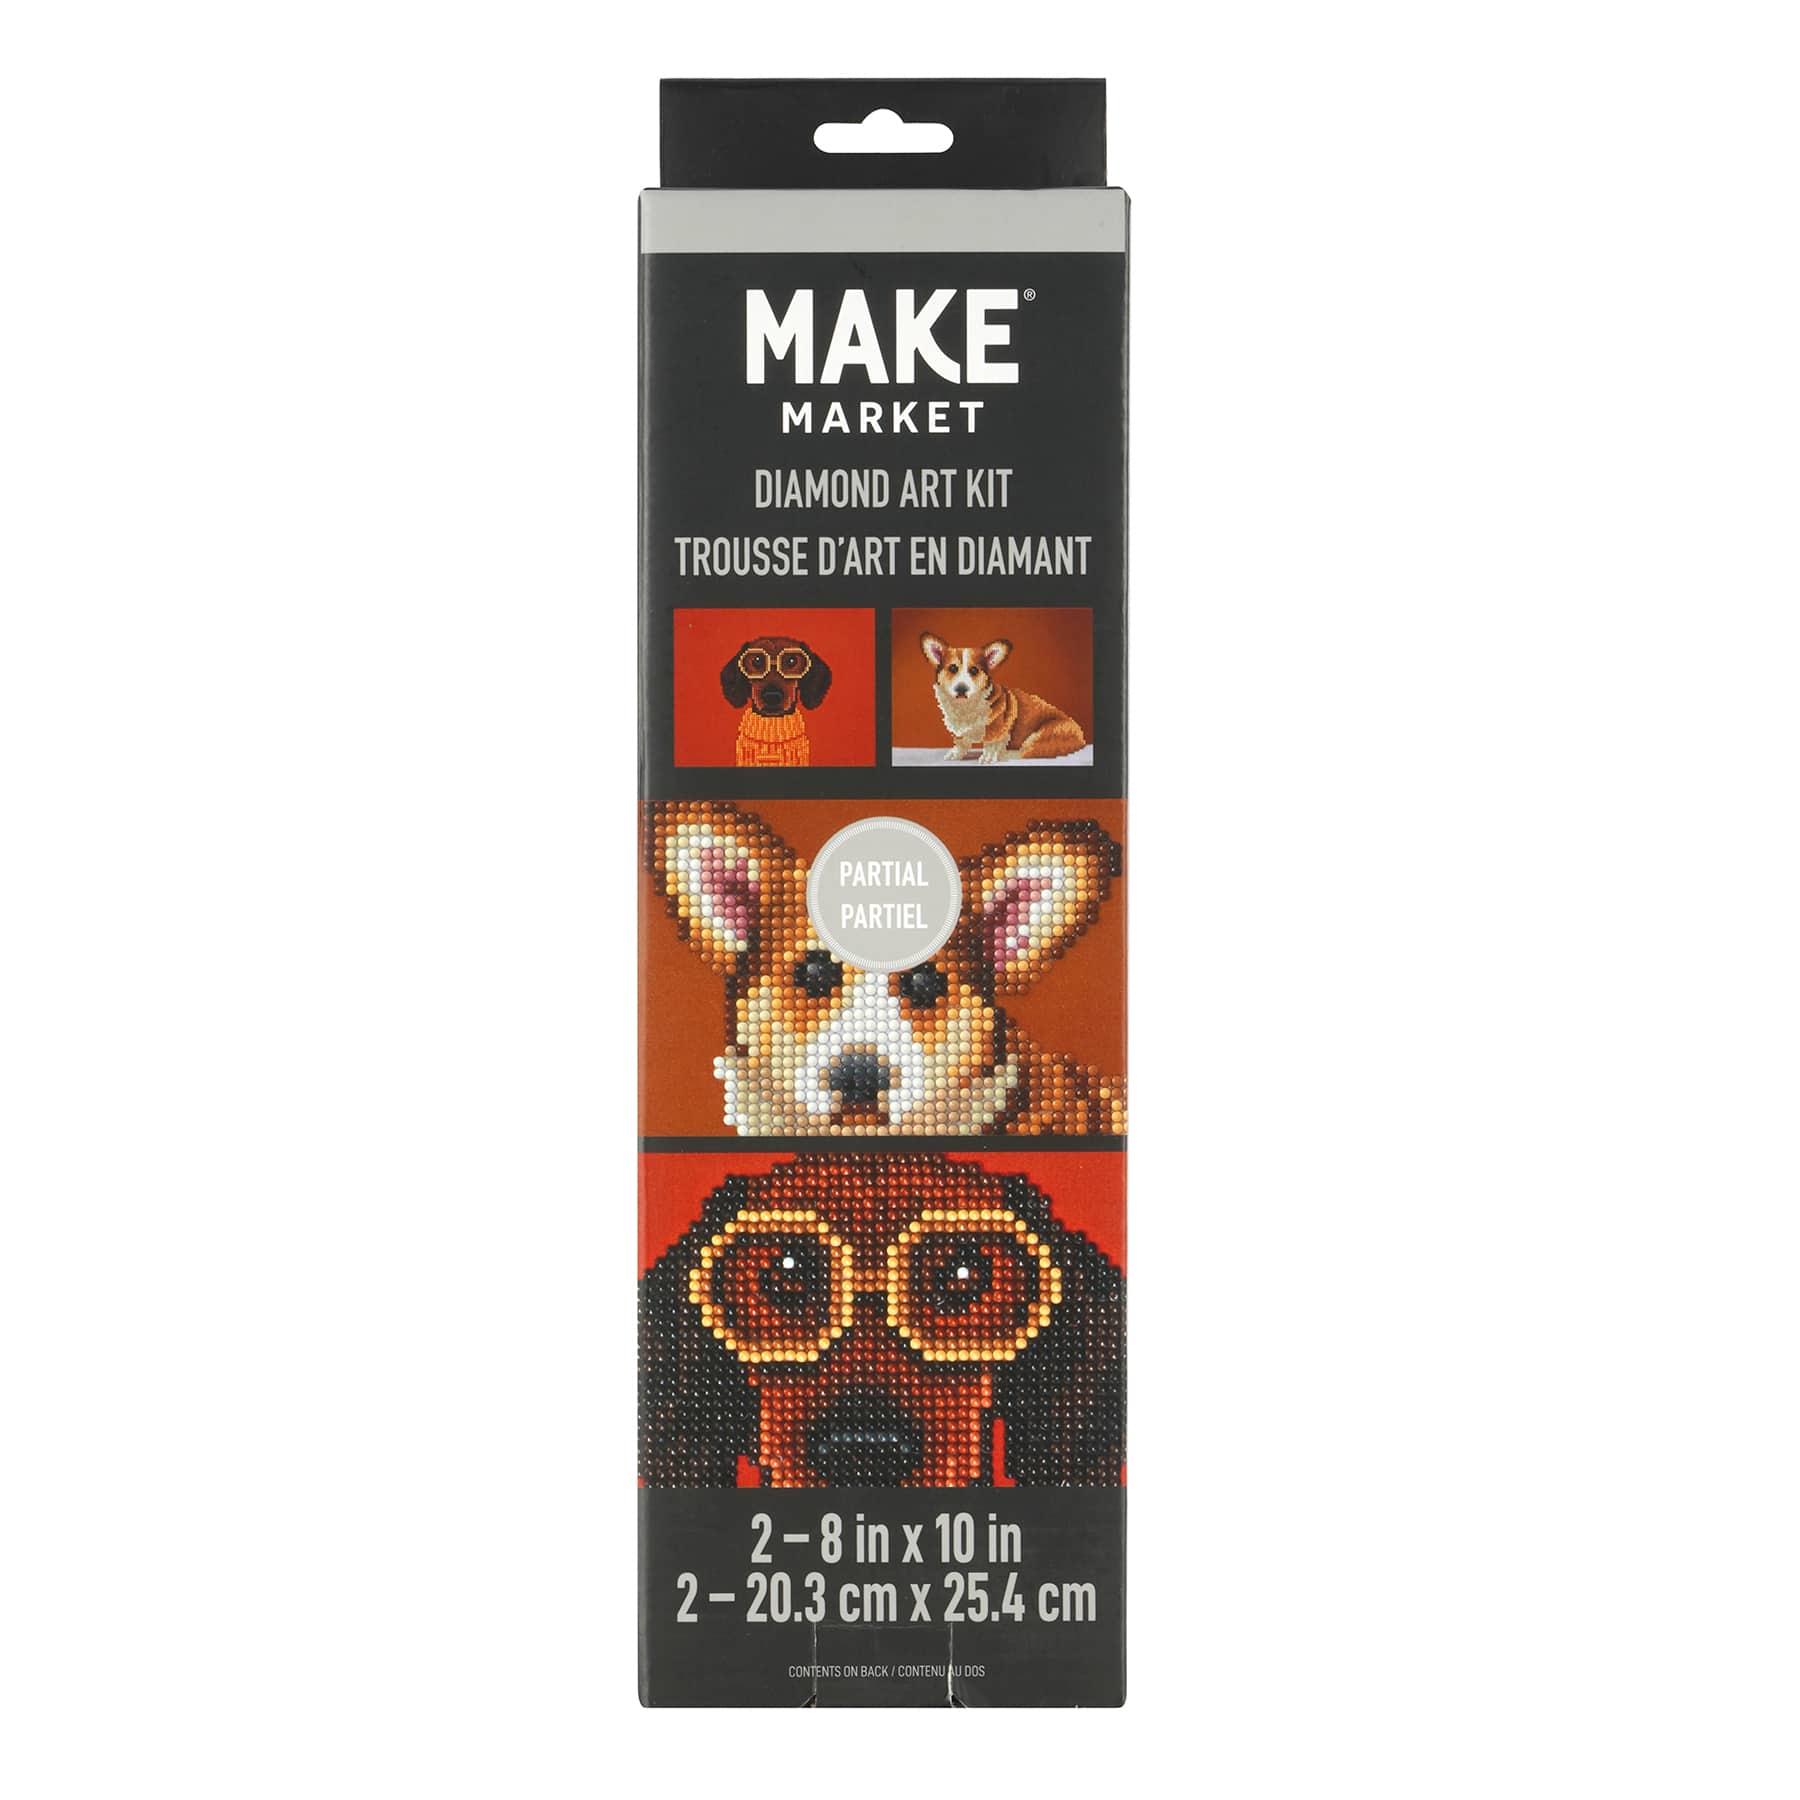 Make Market Puppies in Christmas Stockings Diamond Art Kit - 1 Each